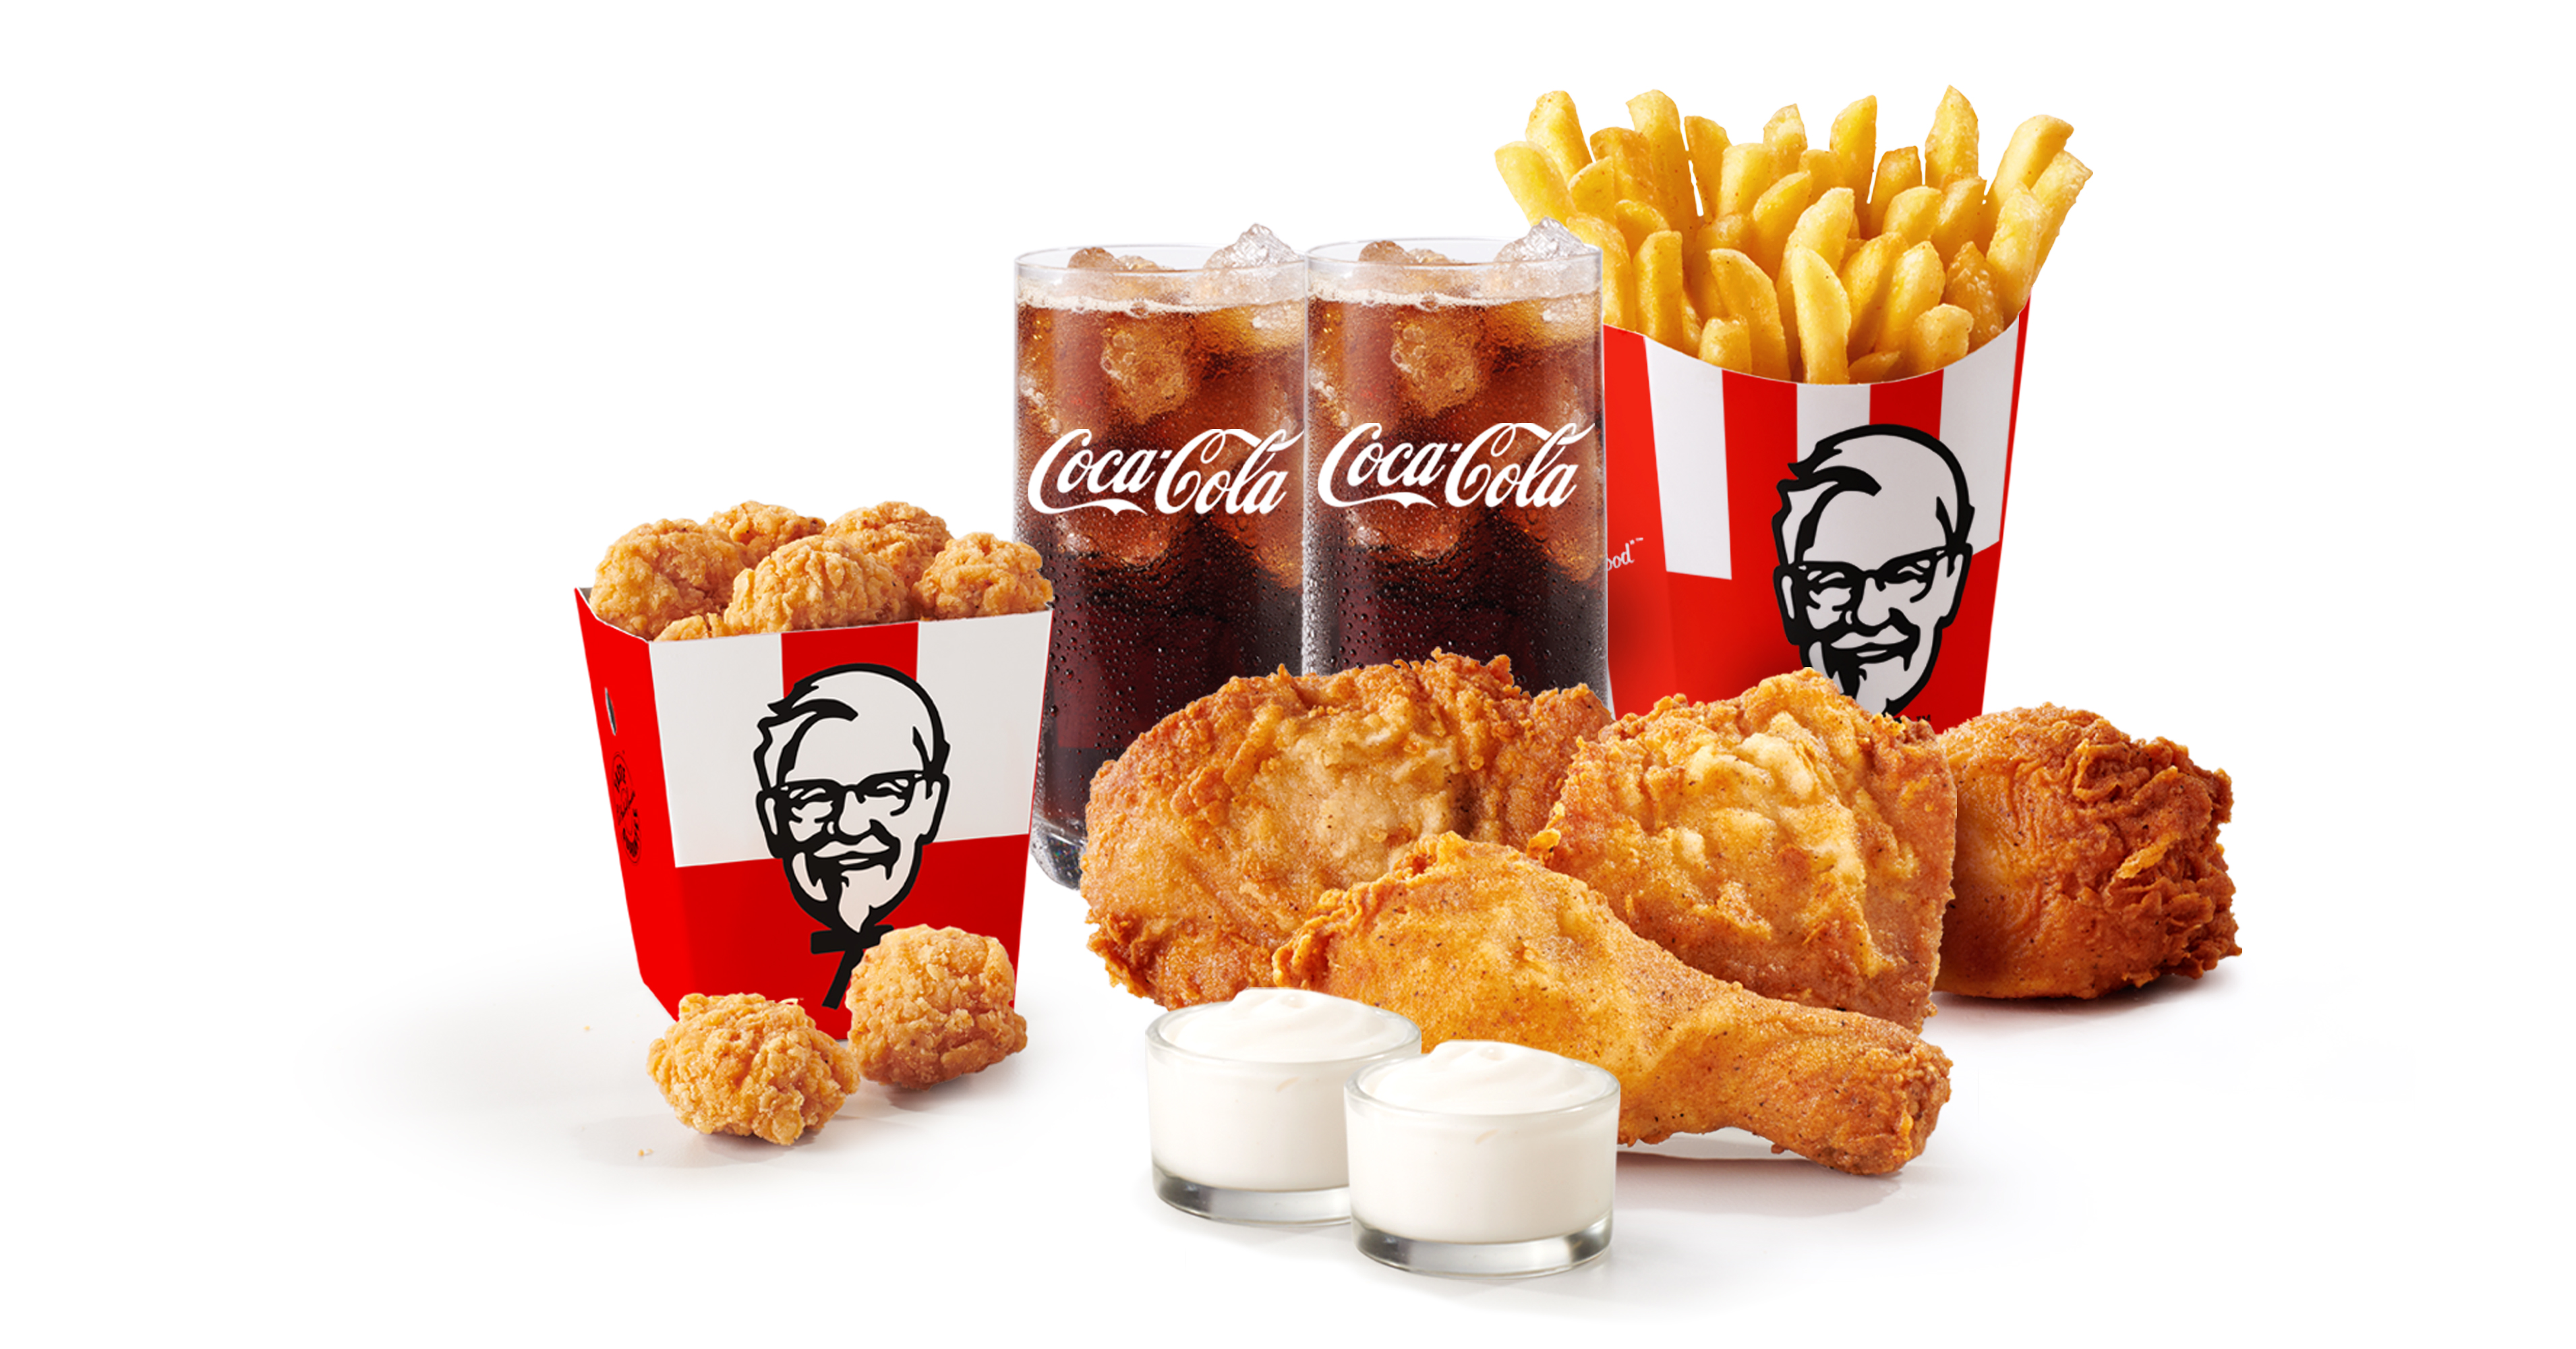 KFC BIG DEAL - HOT & CRISPY